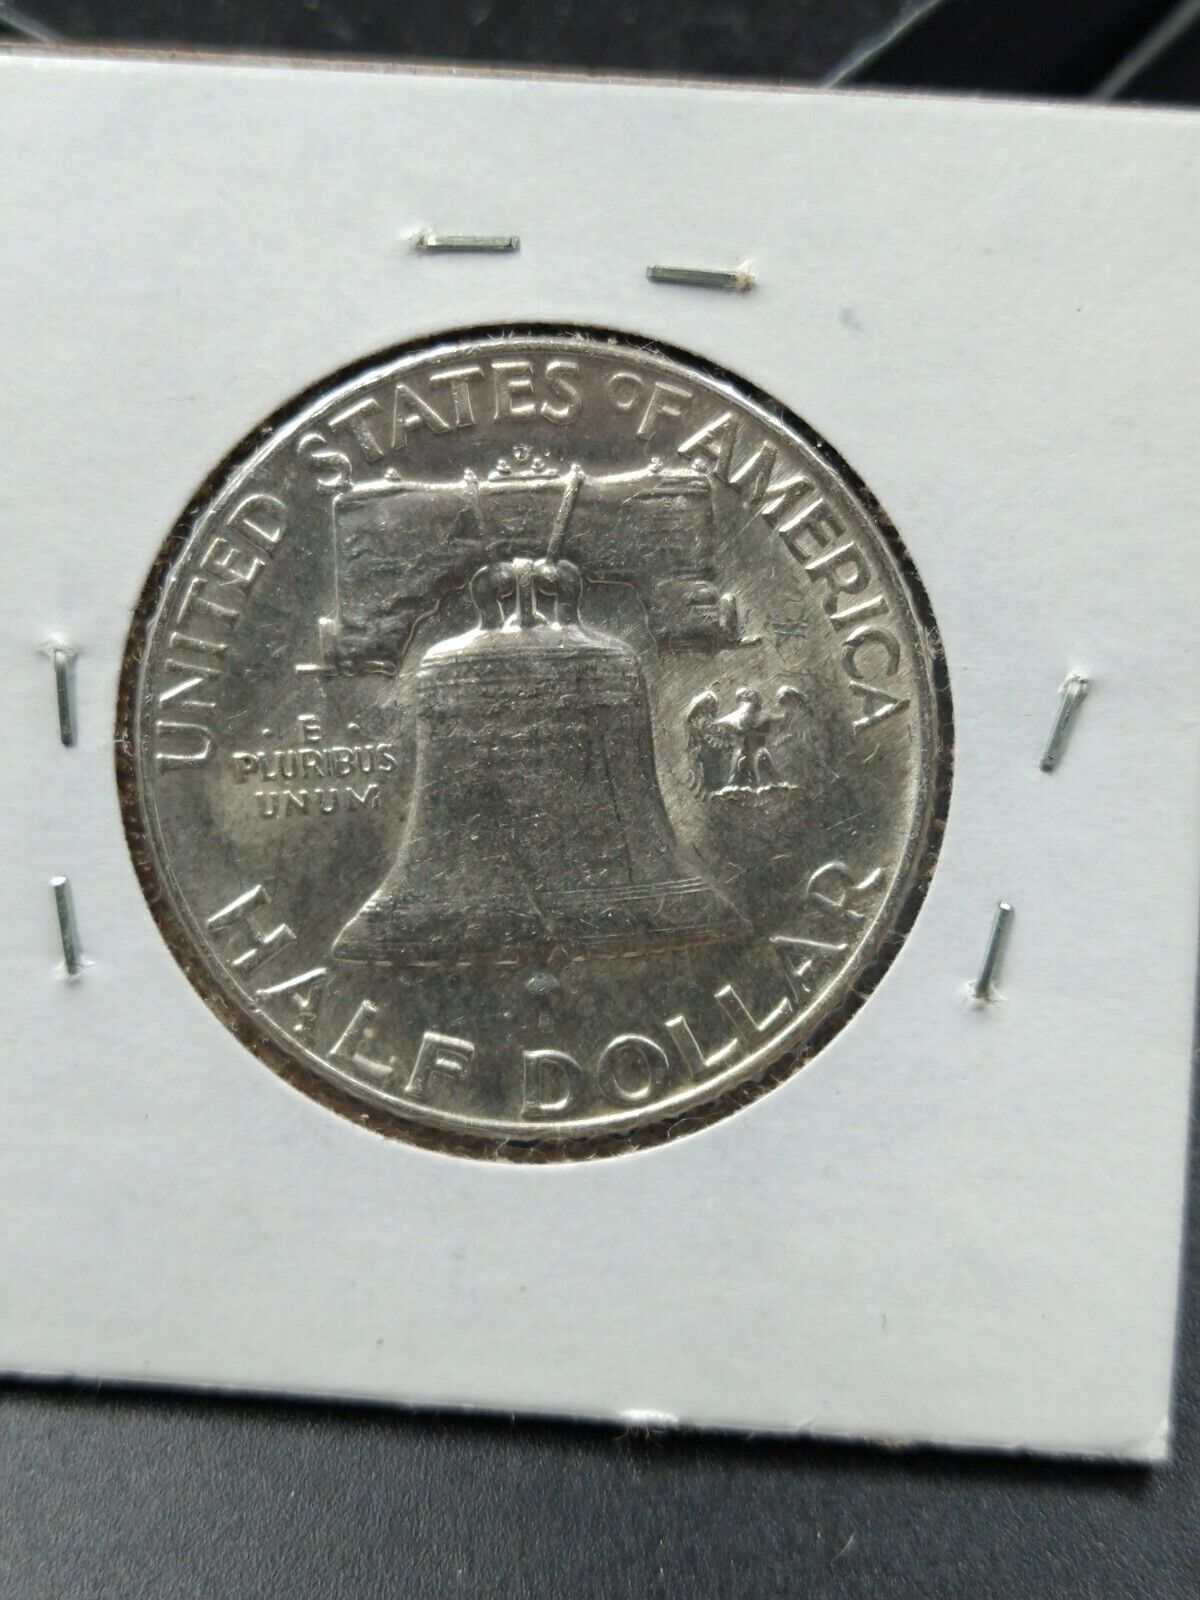 1953 D Franklin Silver 90% Half Dollar Coin AVG BU Uncirculated